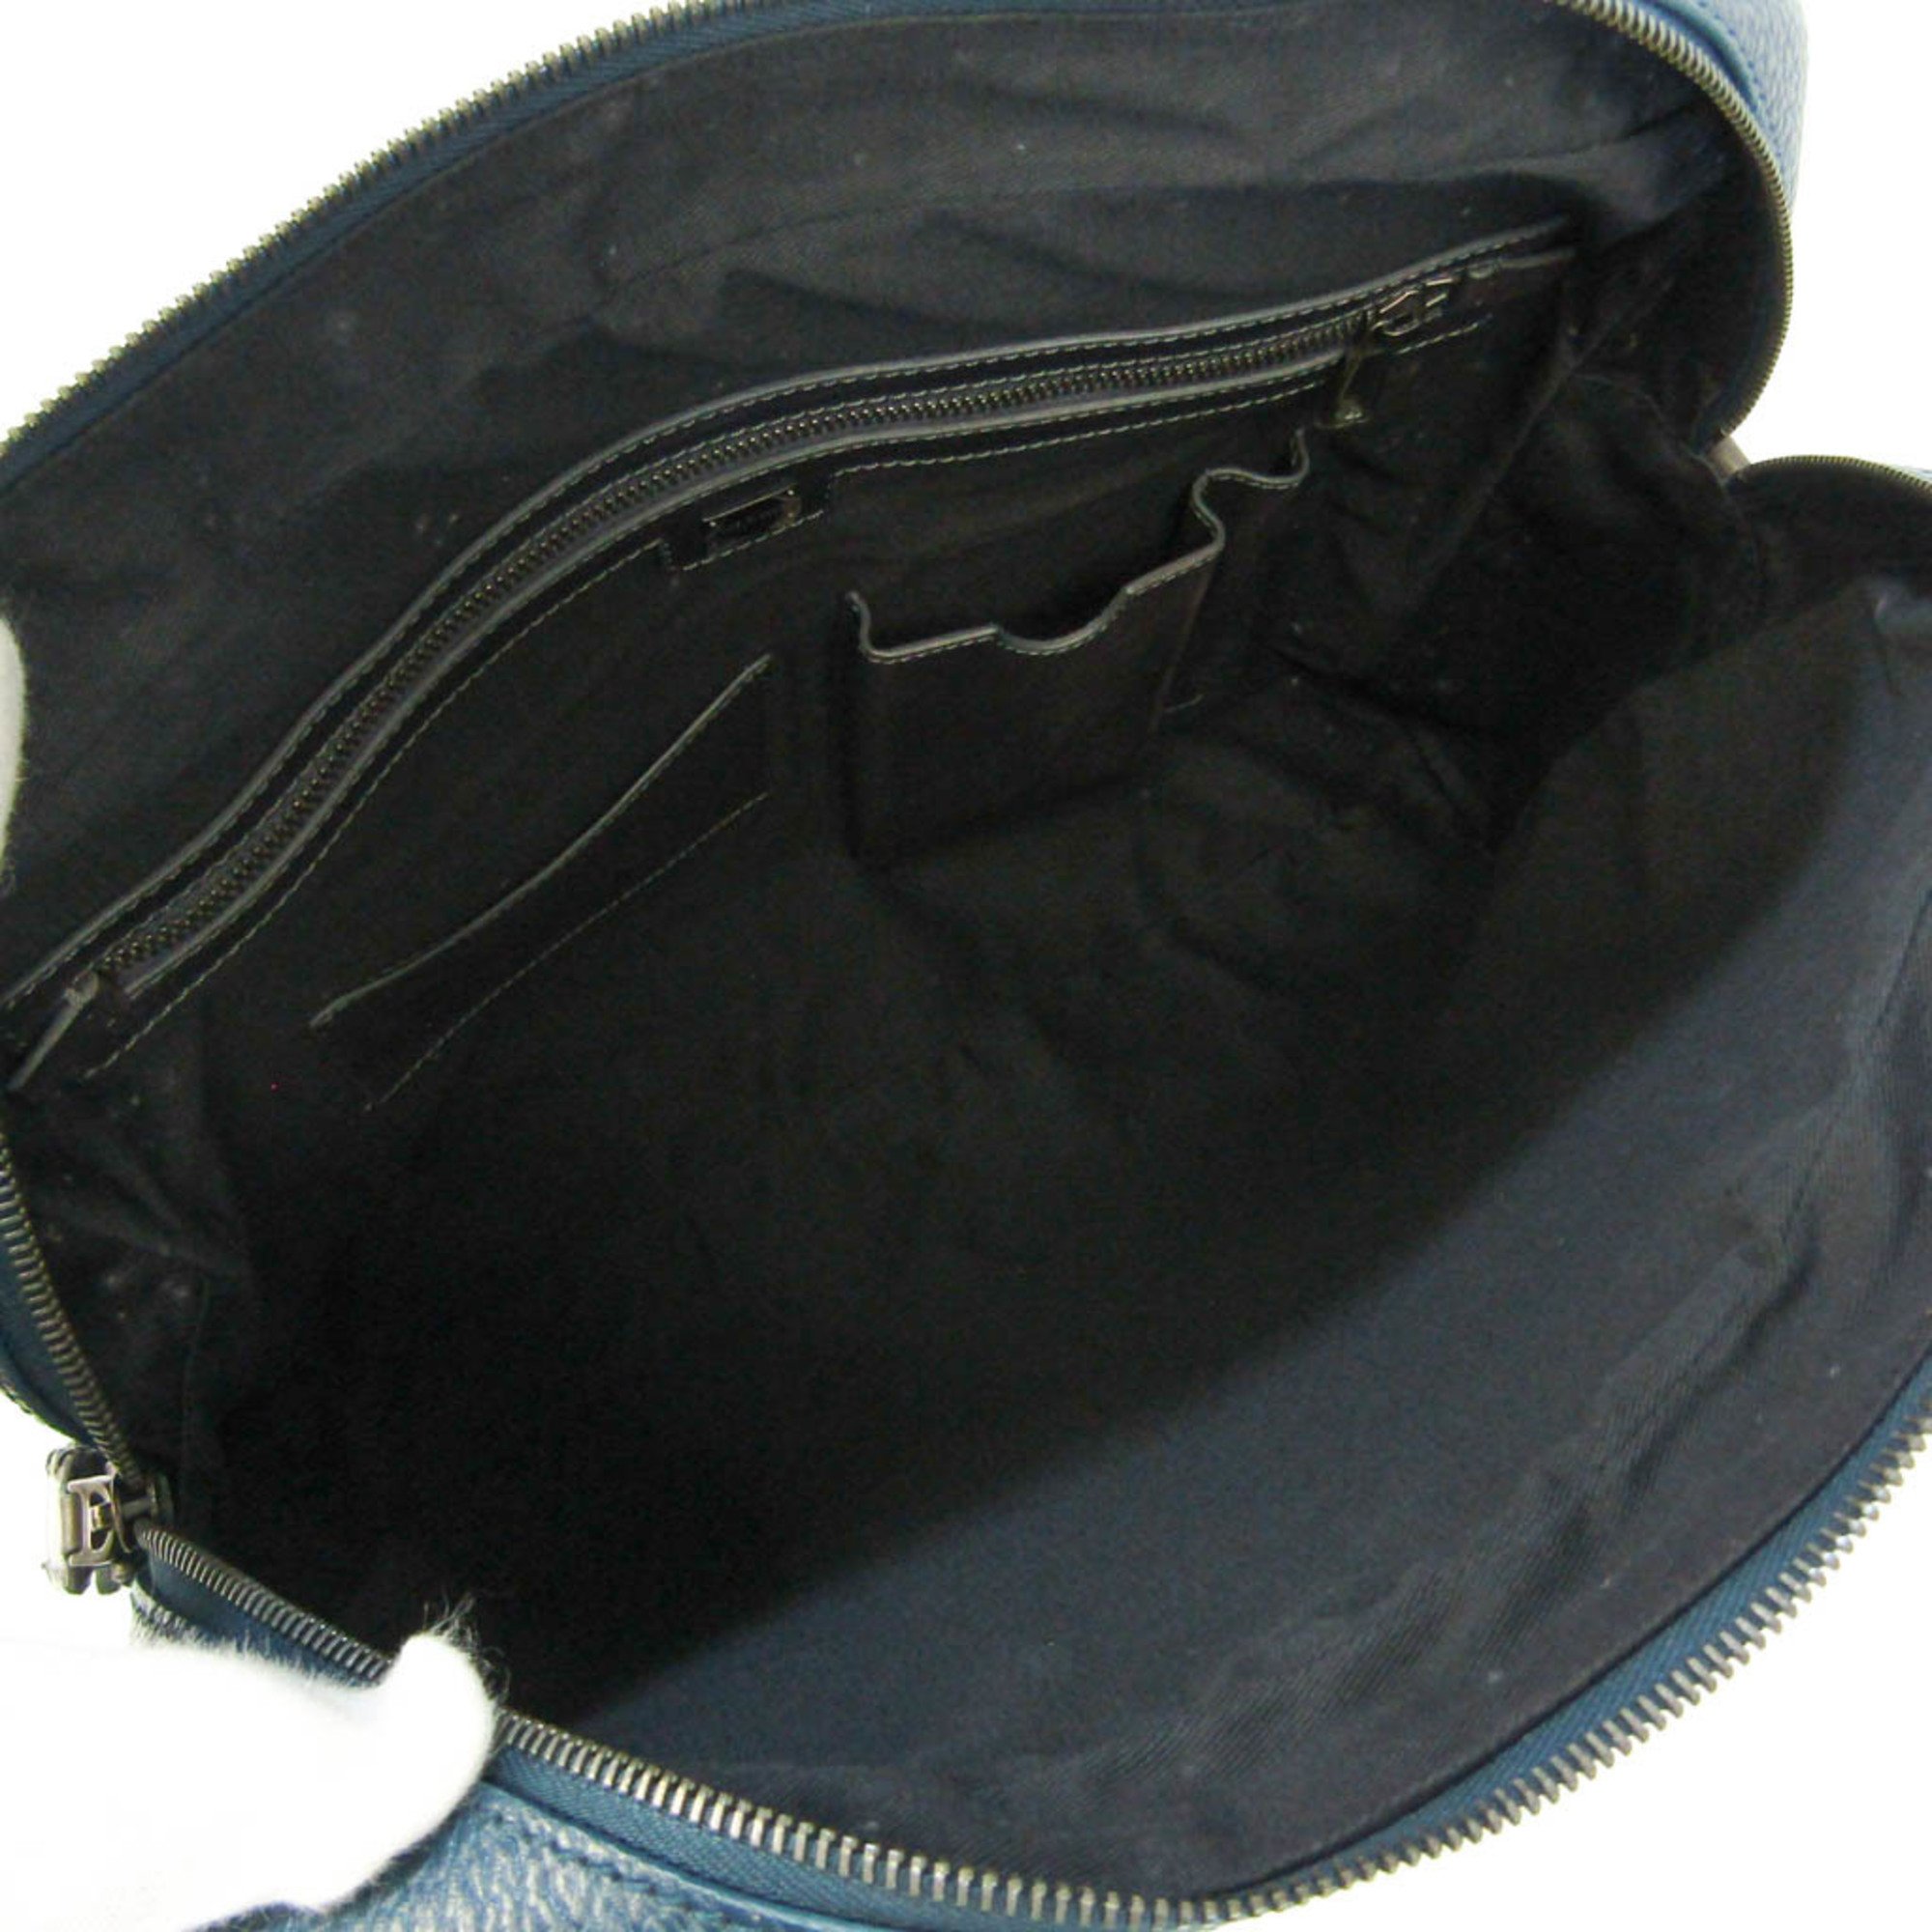 Dolce & Gabbana Men's Leather Briefcase Gray Brown,Navy